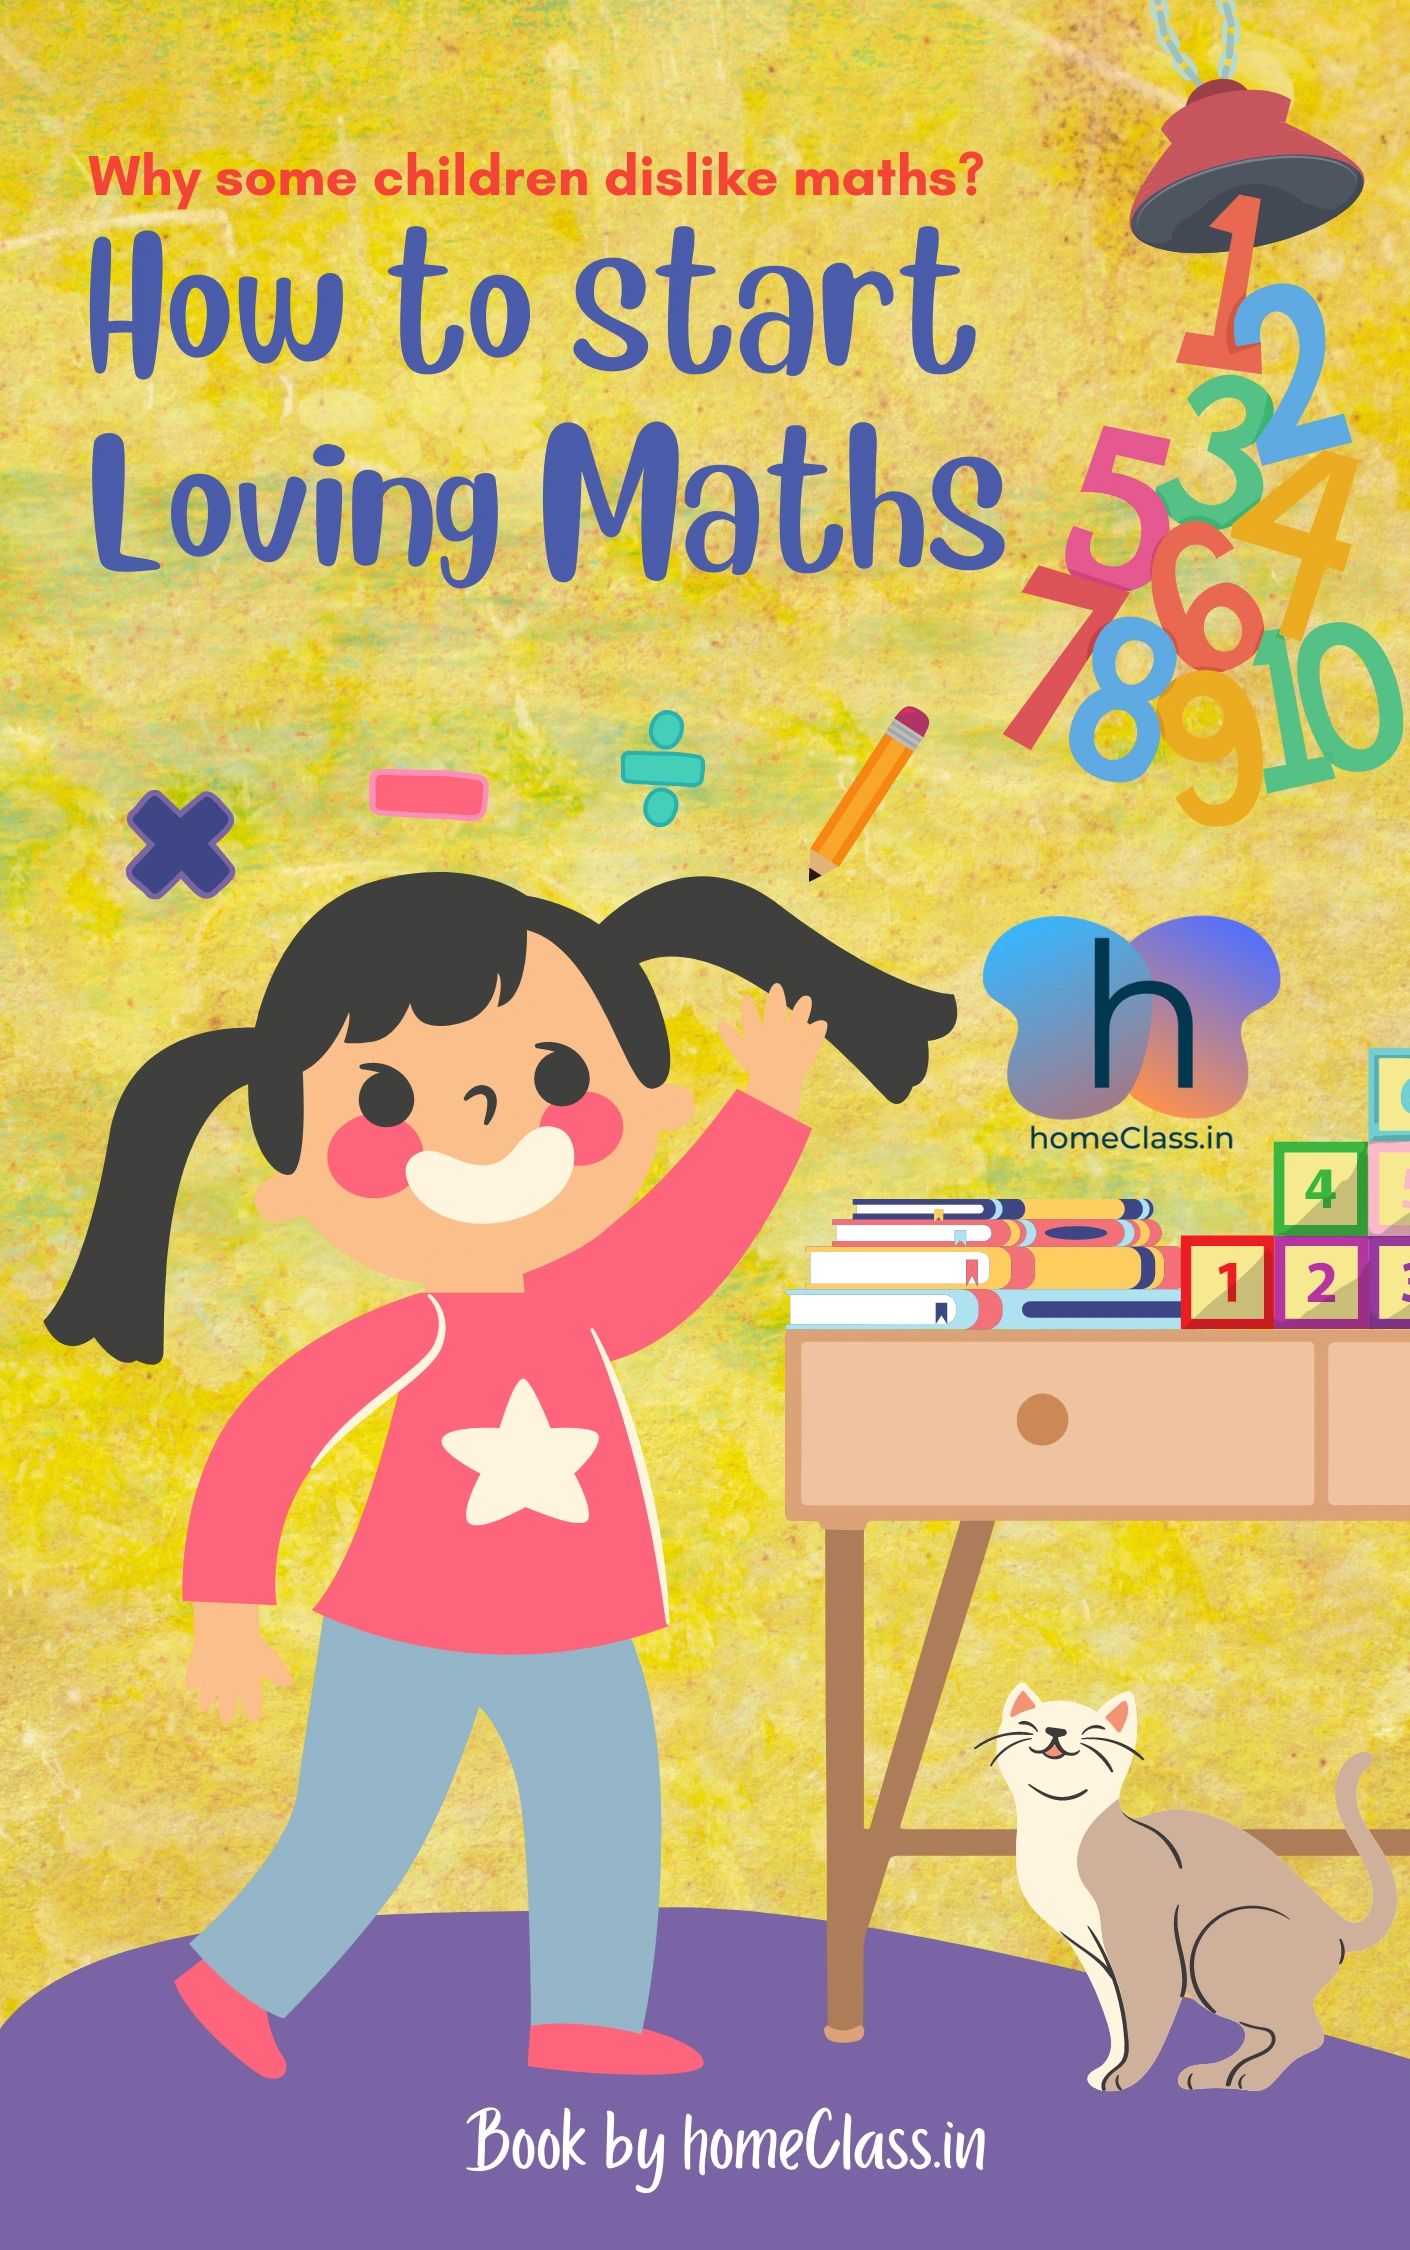 homeclass free ebook on how to start loving maths.